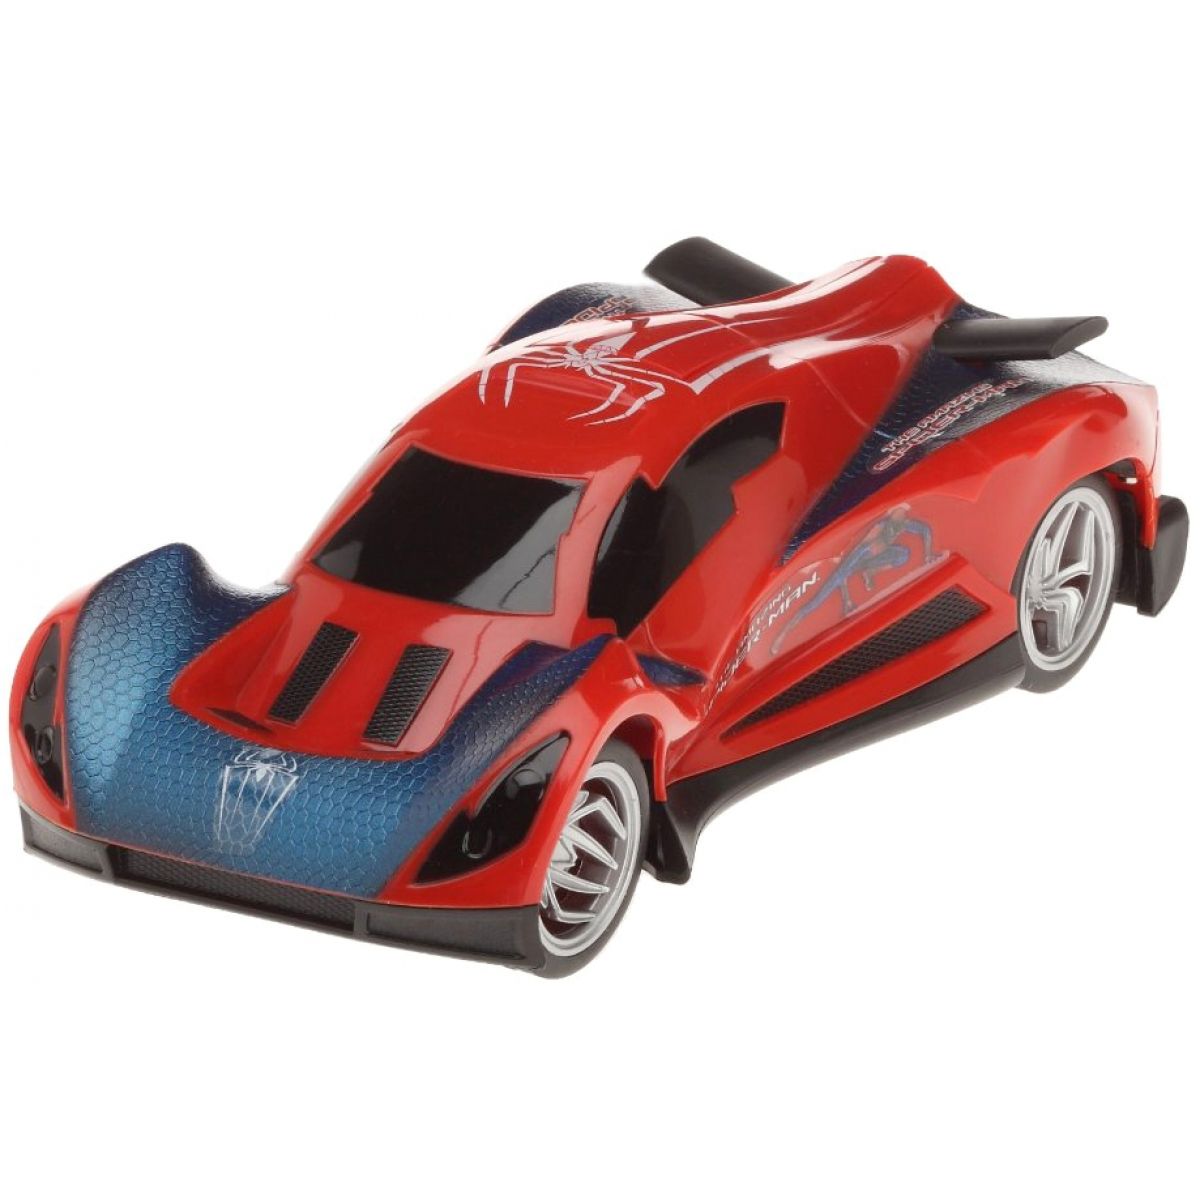 Majorette Spiderman RC Turbo Racer 1:24 - Auto